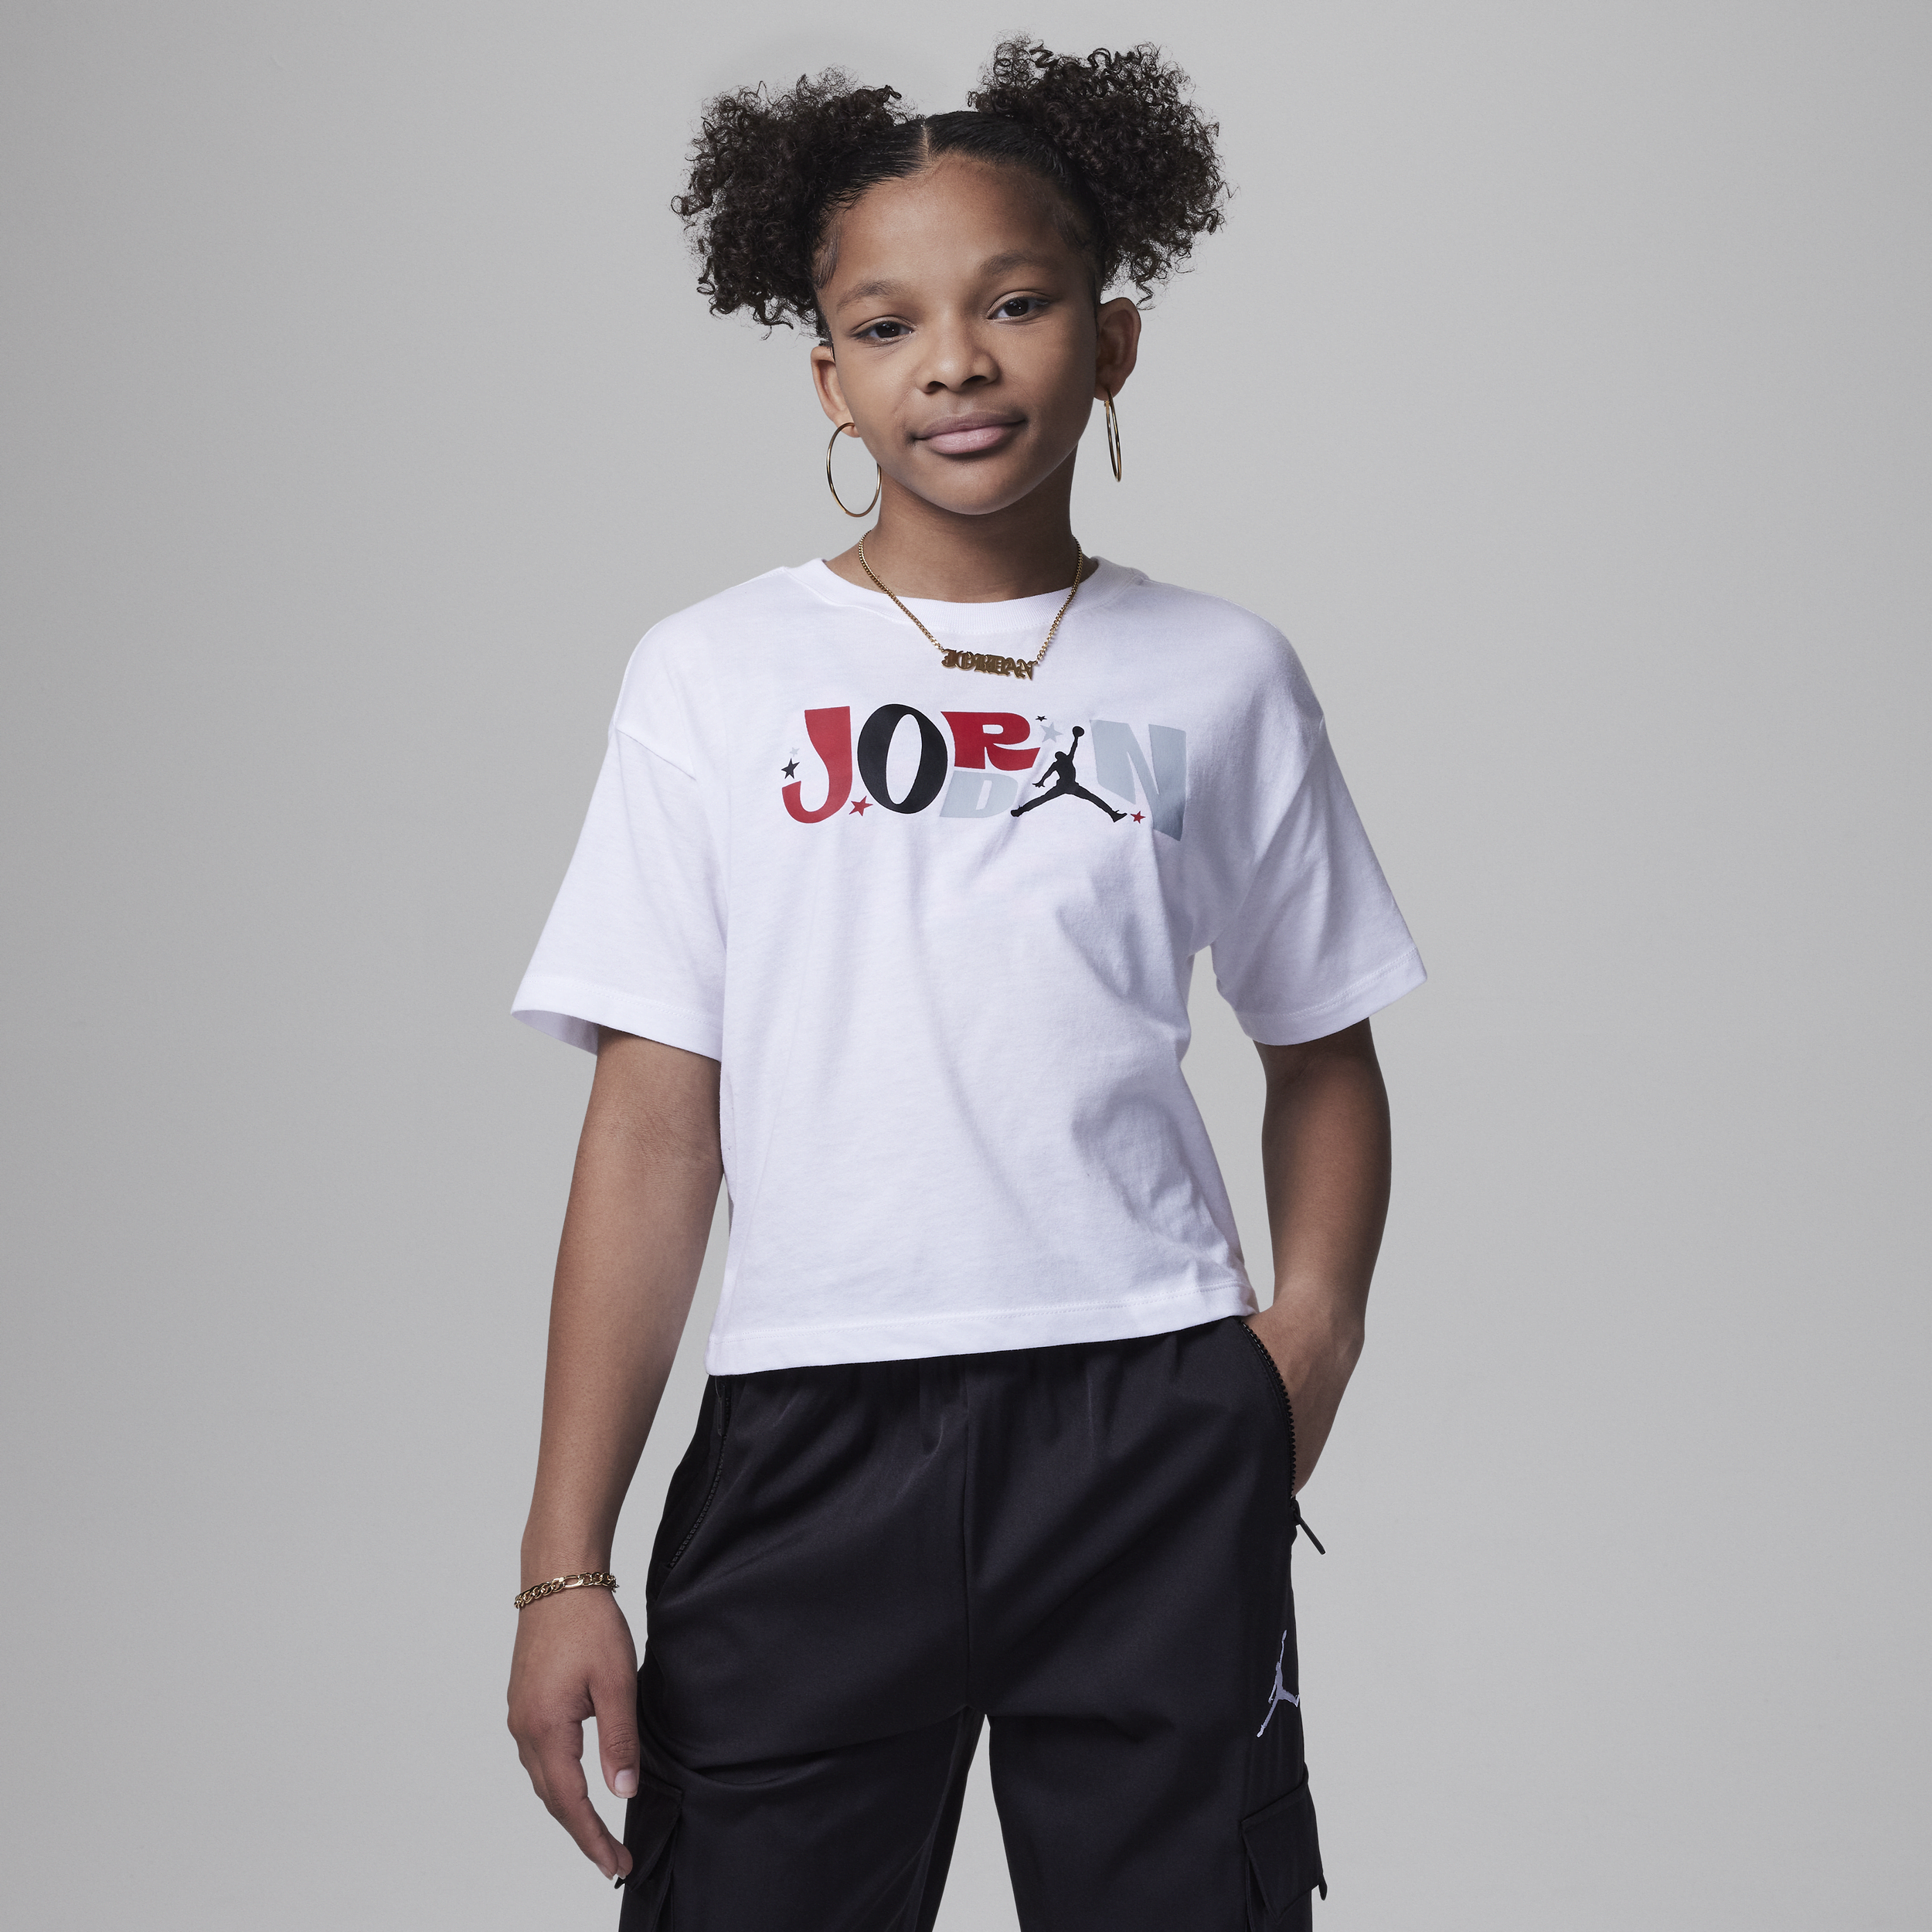 Jordan All Star Tee Camiseta - Niño/a - Blanco